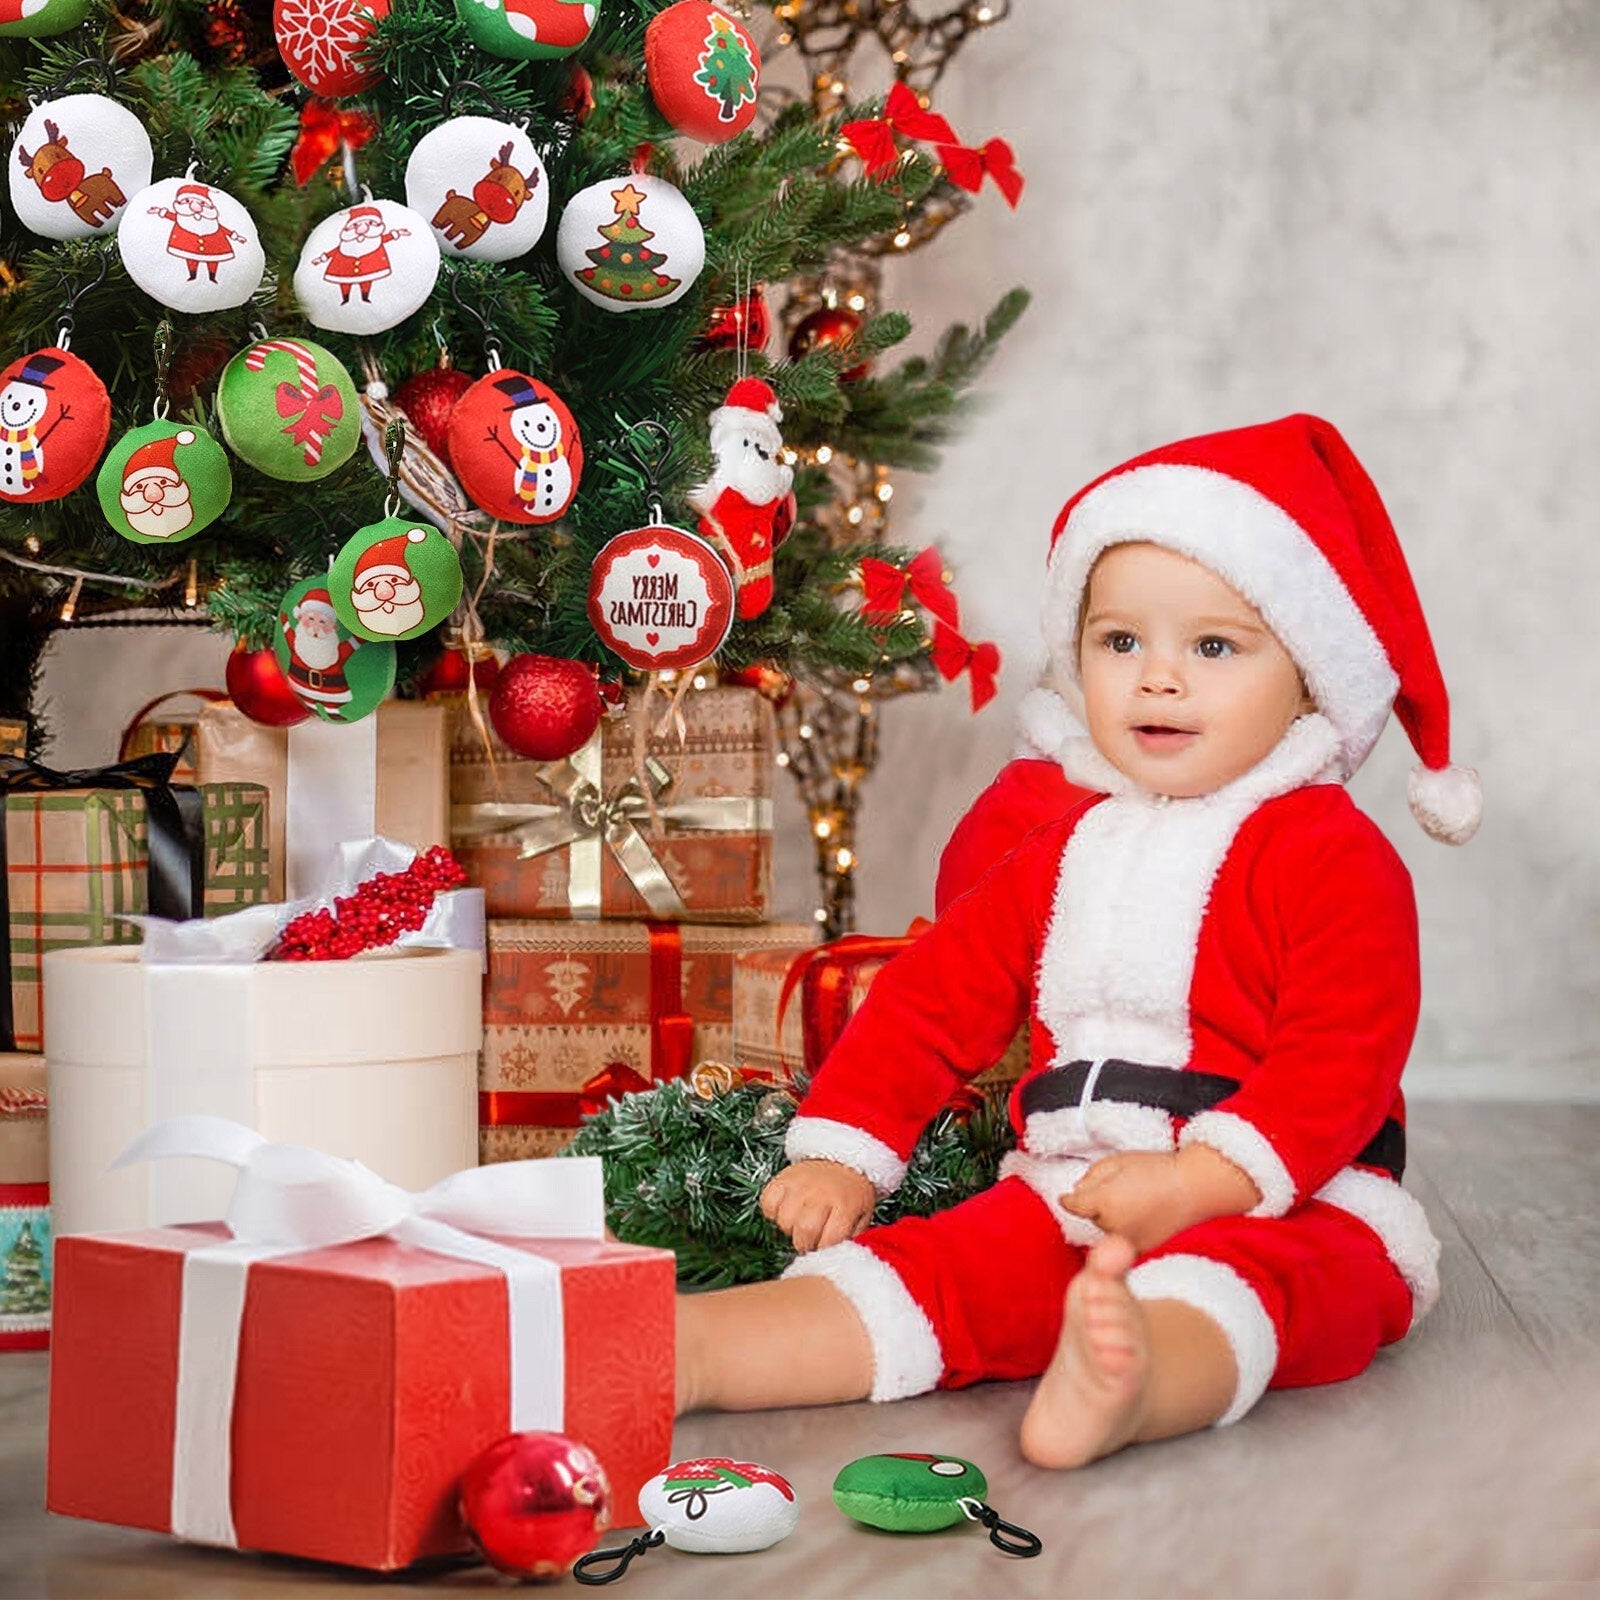 25 Pcs Christmas Mini Plush Key-chains Christmas Decoration Kids Party Supplies Favors